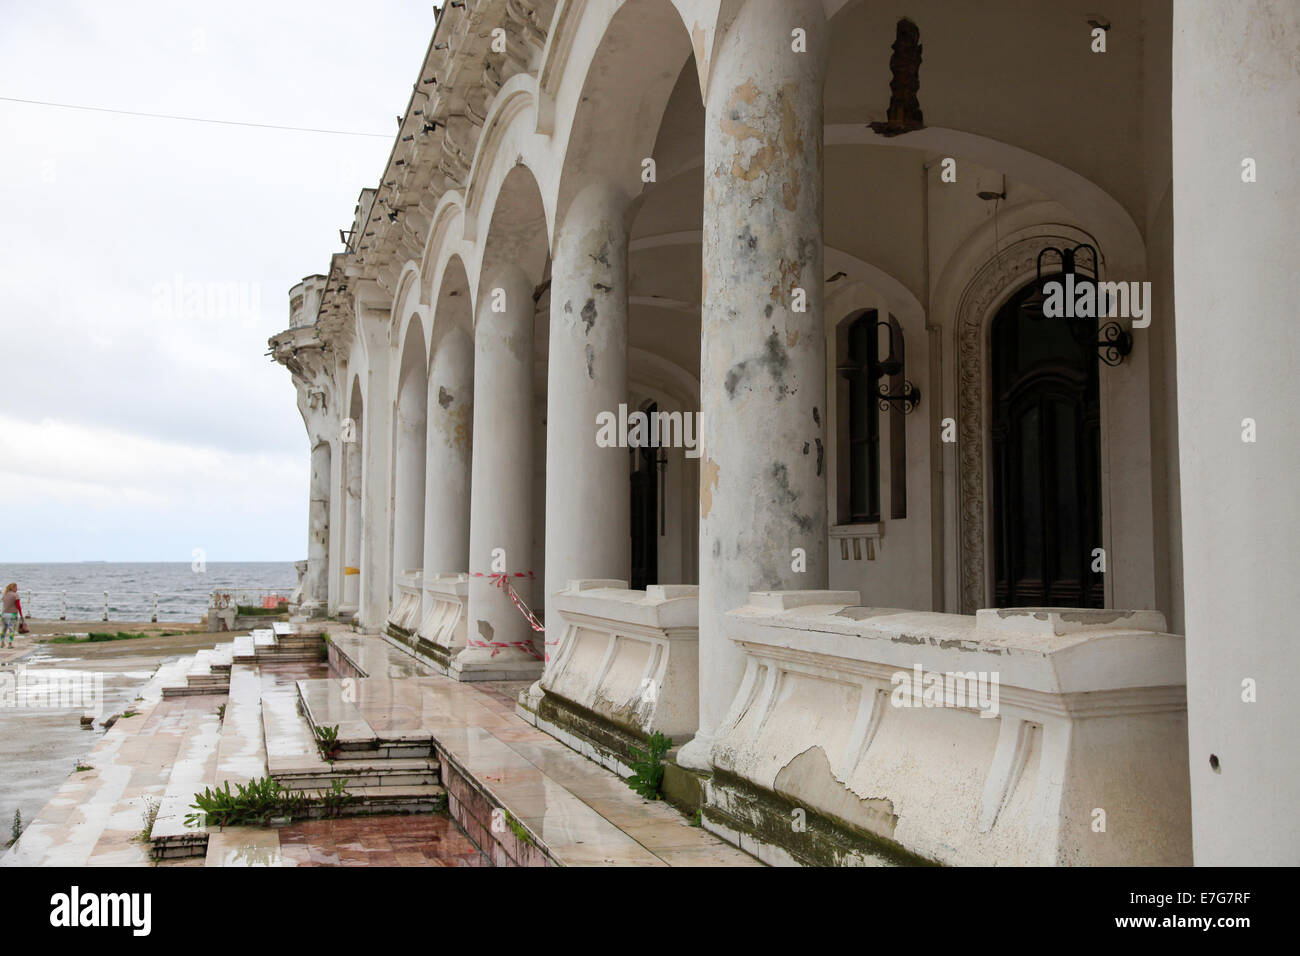 Post communist decay, abandoned building deterioration, Bucharest Romania Stock Photo